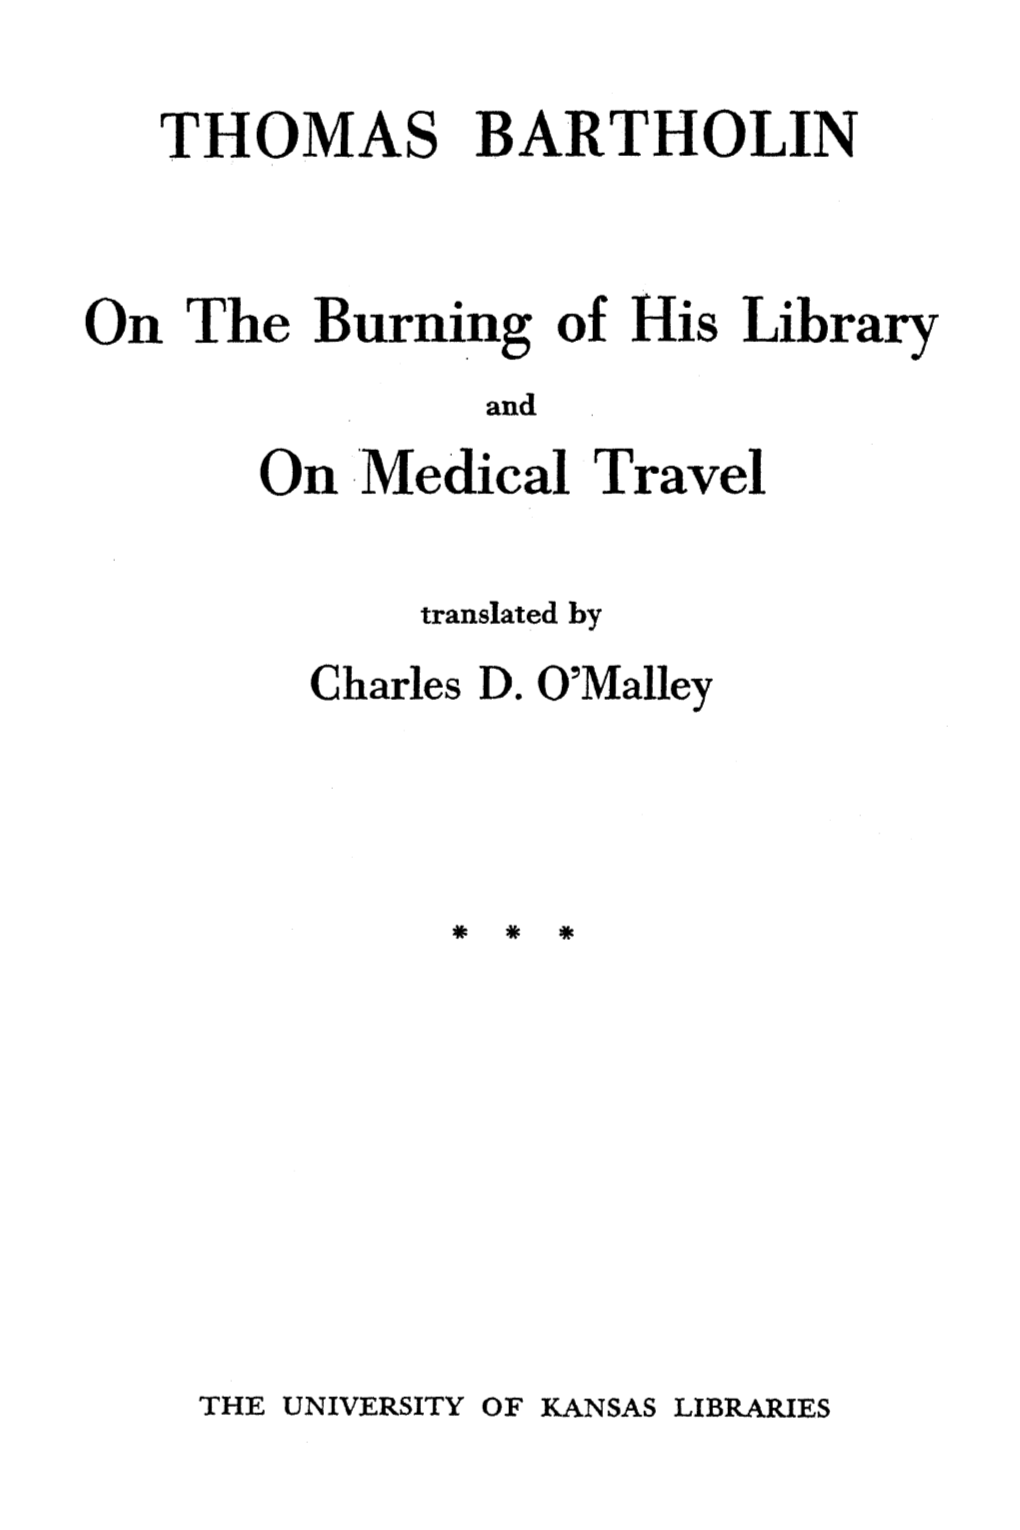 THOMAS BARTHOLIN on the Burning of His Library on Medical